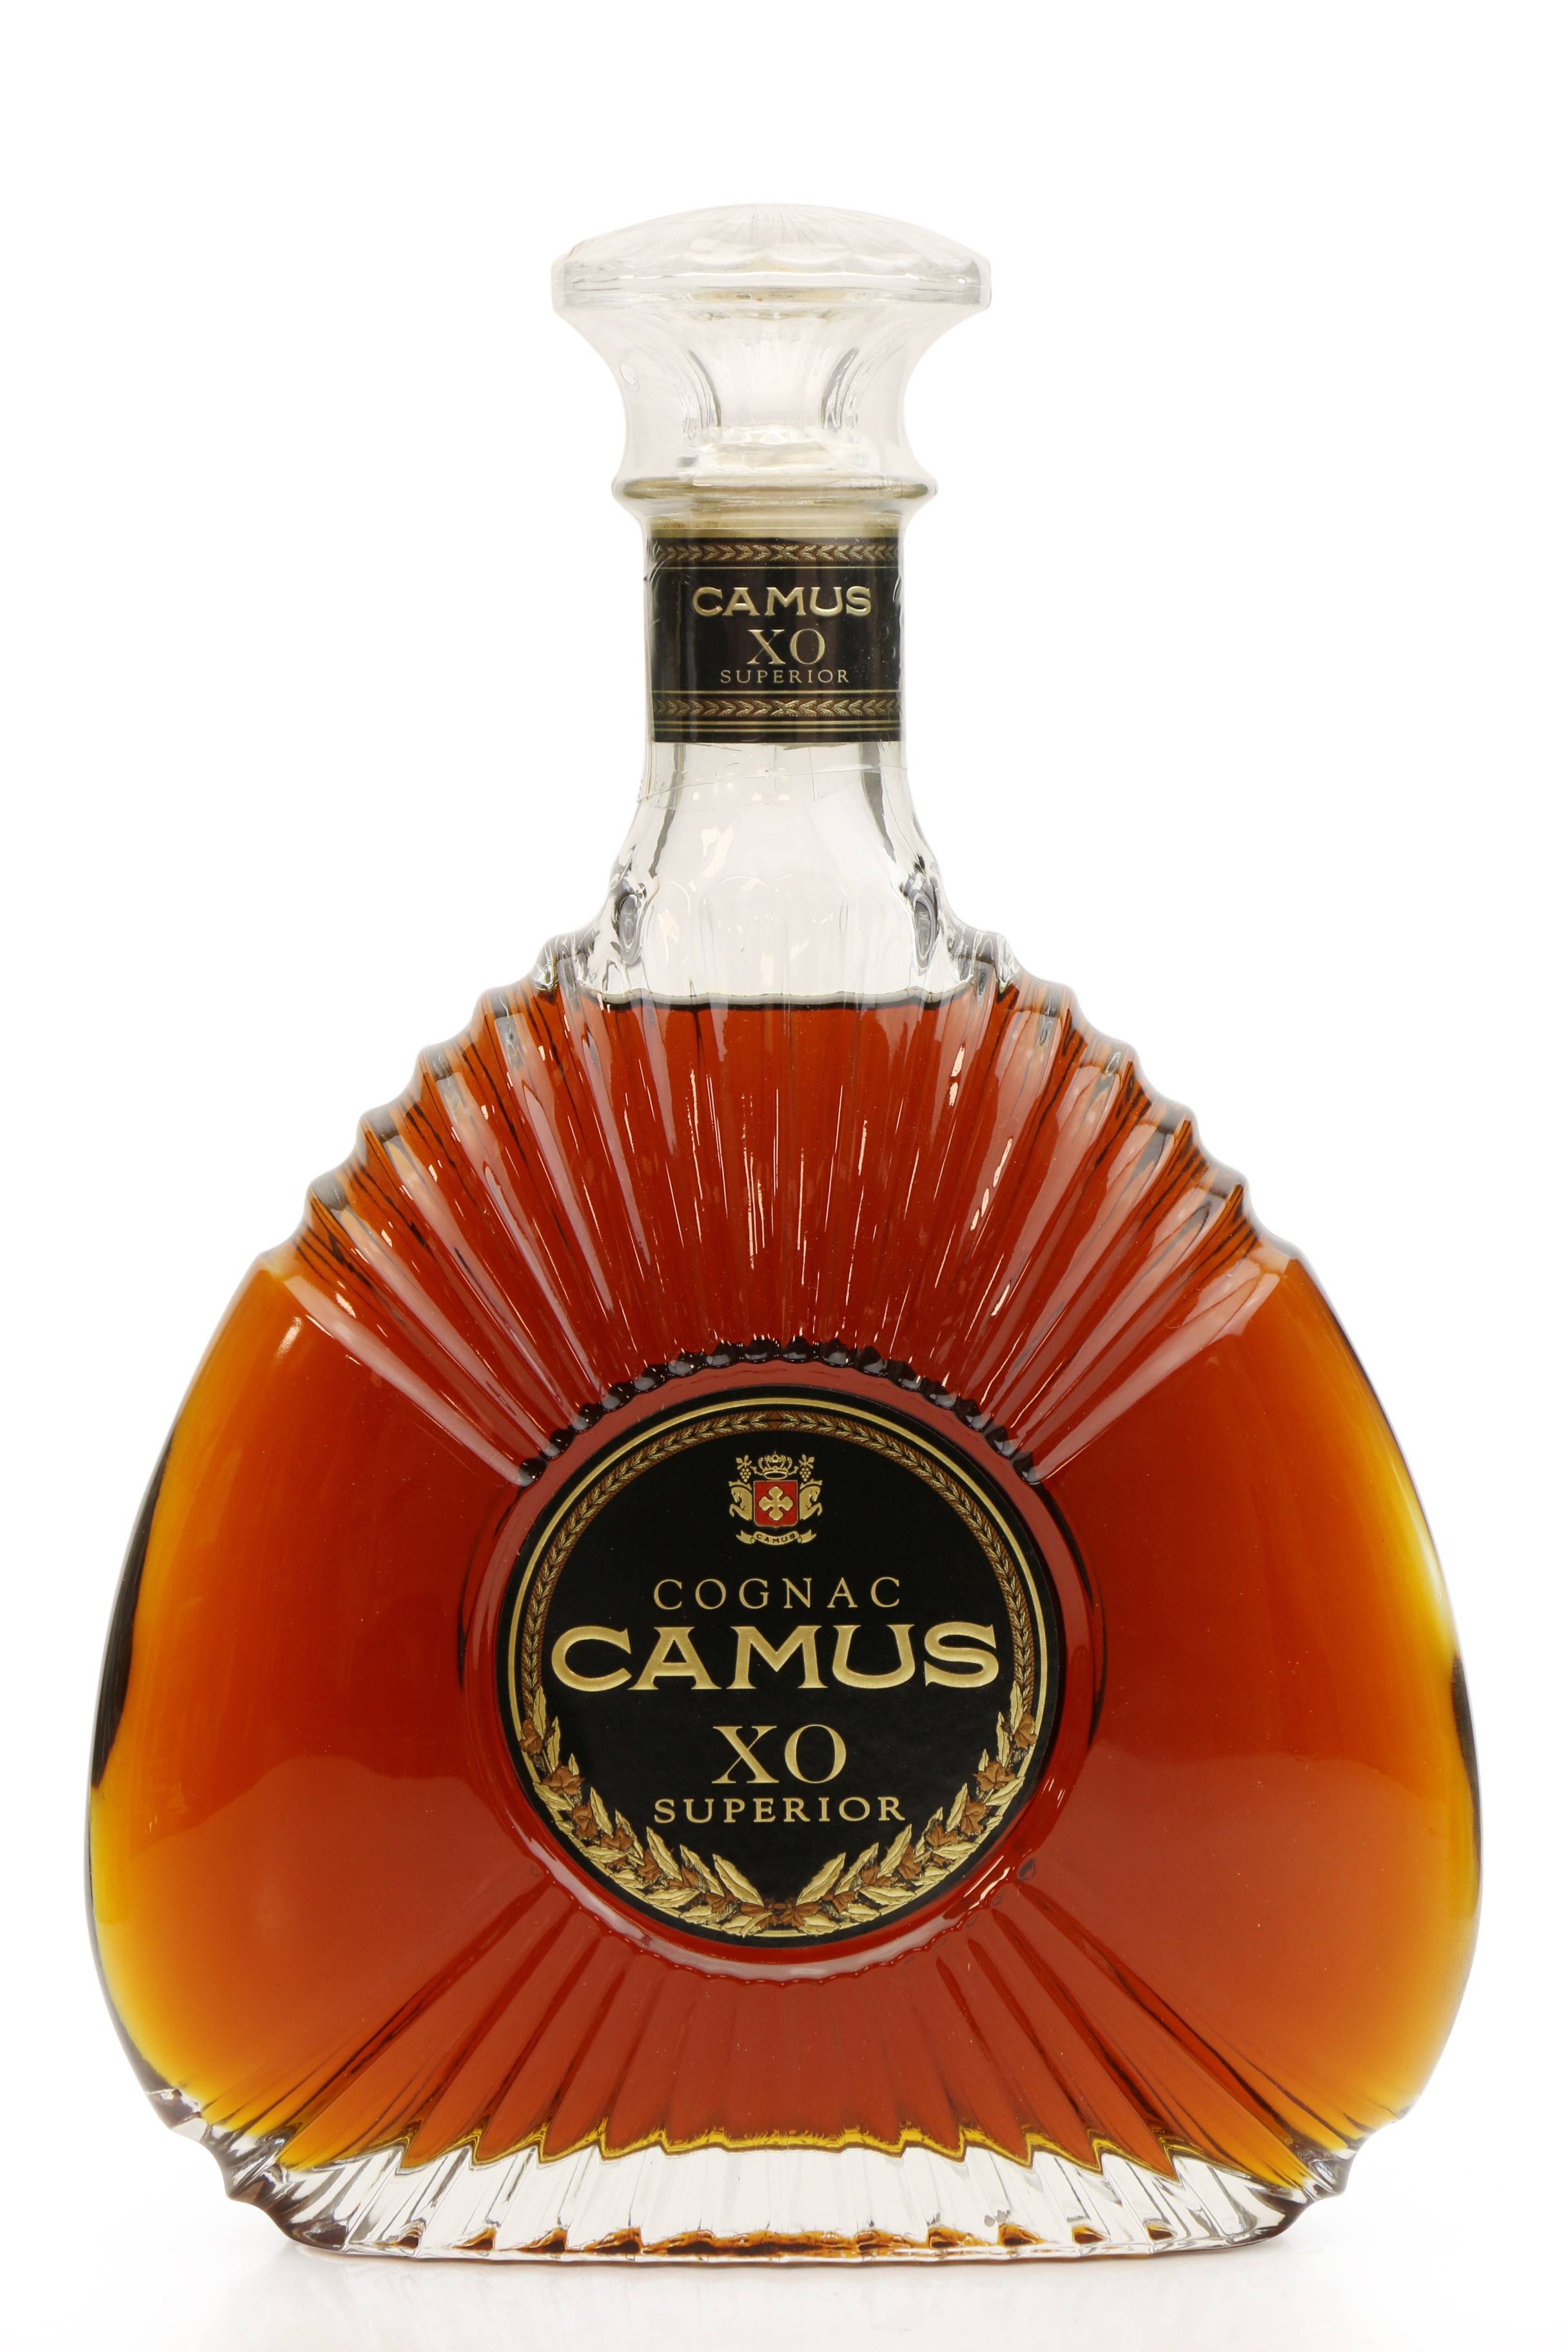 Camus X.O Superior Cognac (1-Litre ) - Just Whisky Auctions